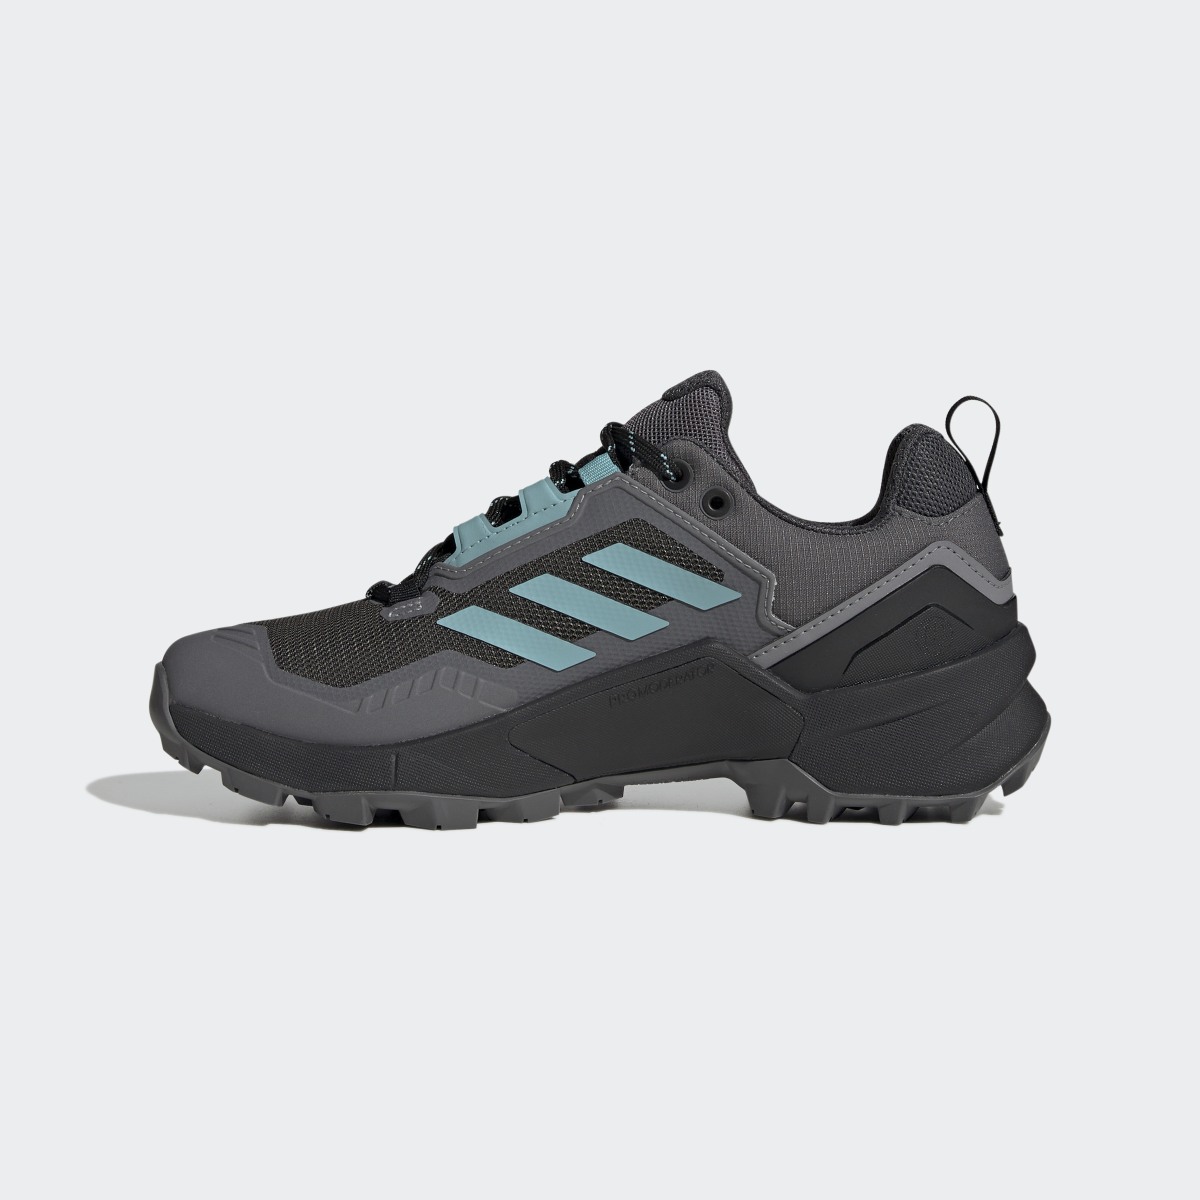 Adidas TERREX Swift R3 GORE-TEX Hiking Shoes. 10